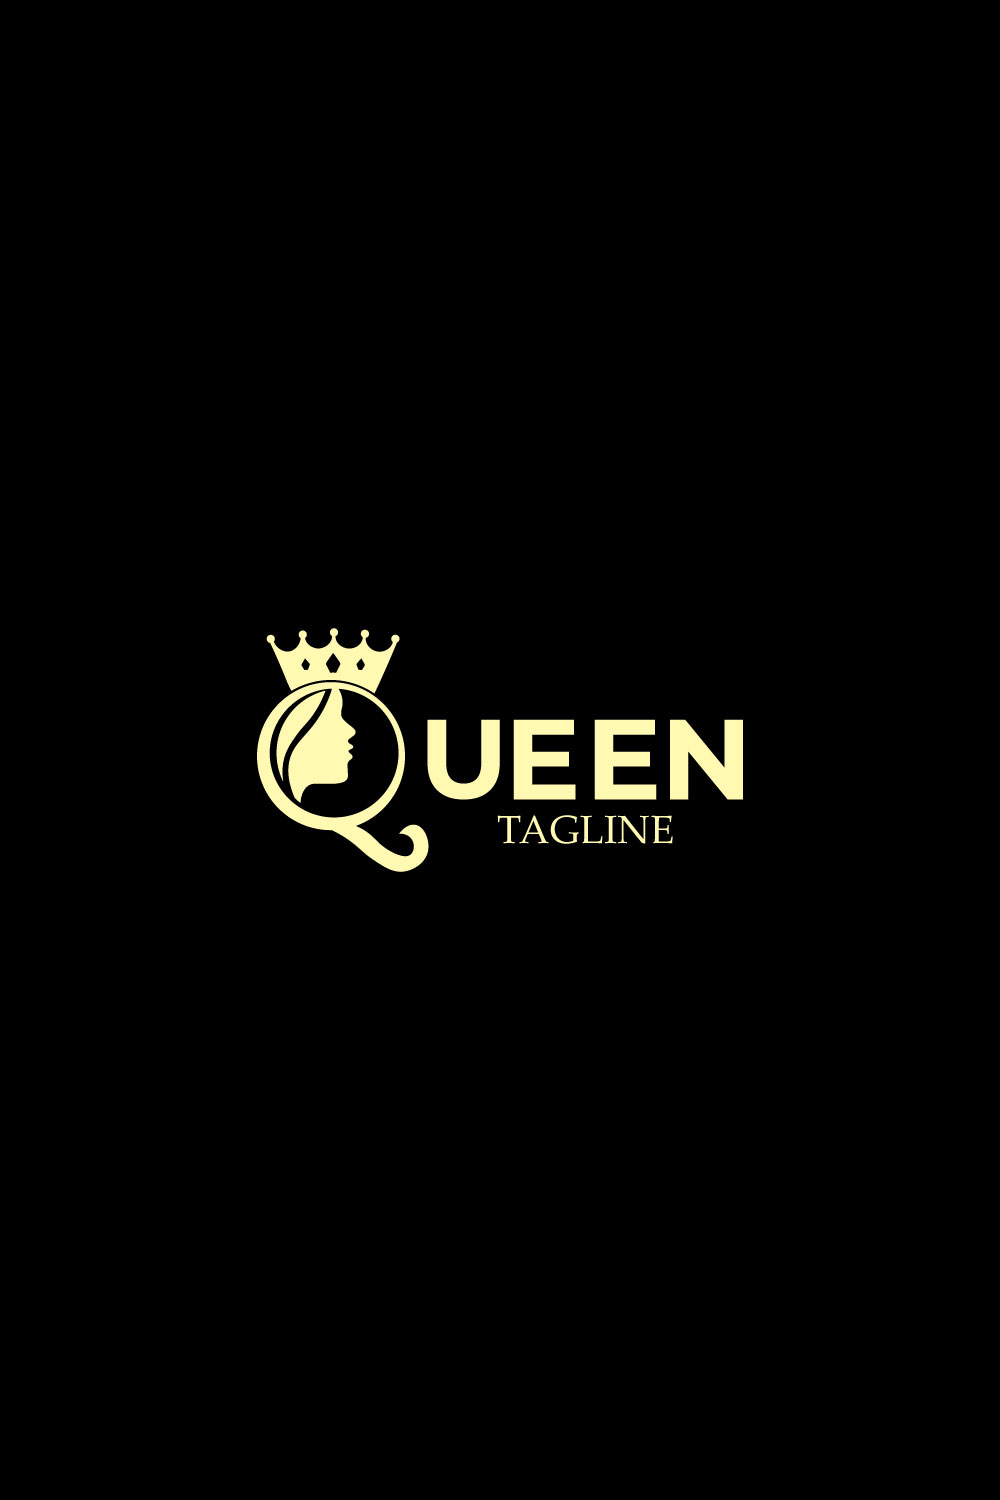 Beauty queen logo design vector illustration pinterest preview image.